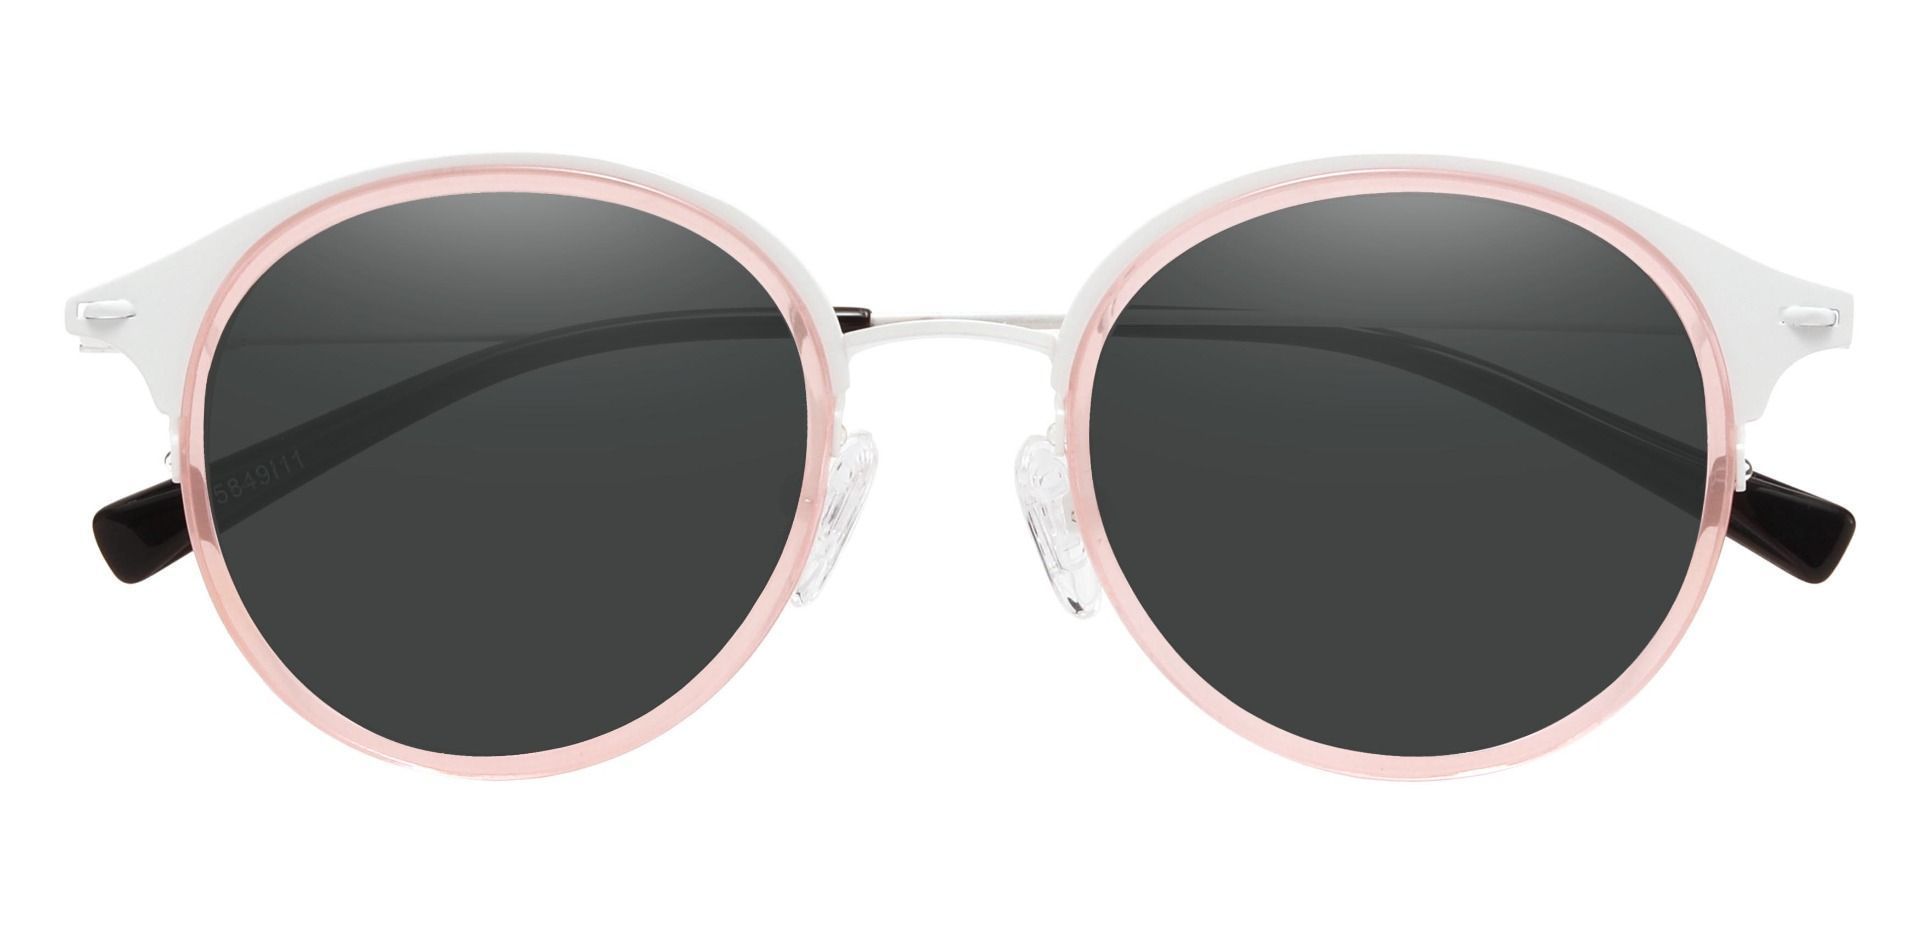 Ramona Round Prescription Sunglasses - White Frame With Gray Lenses